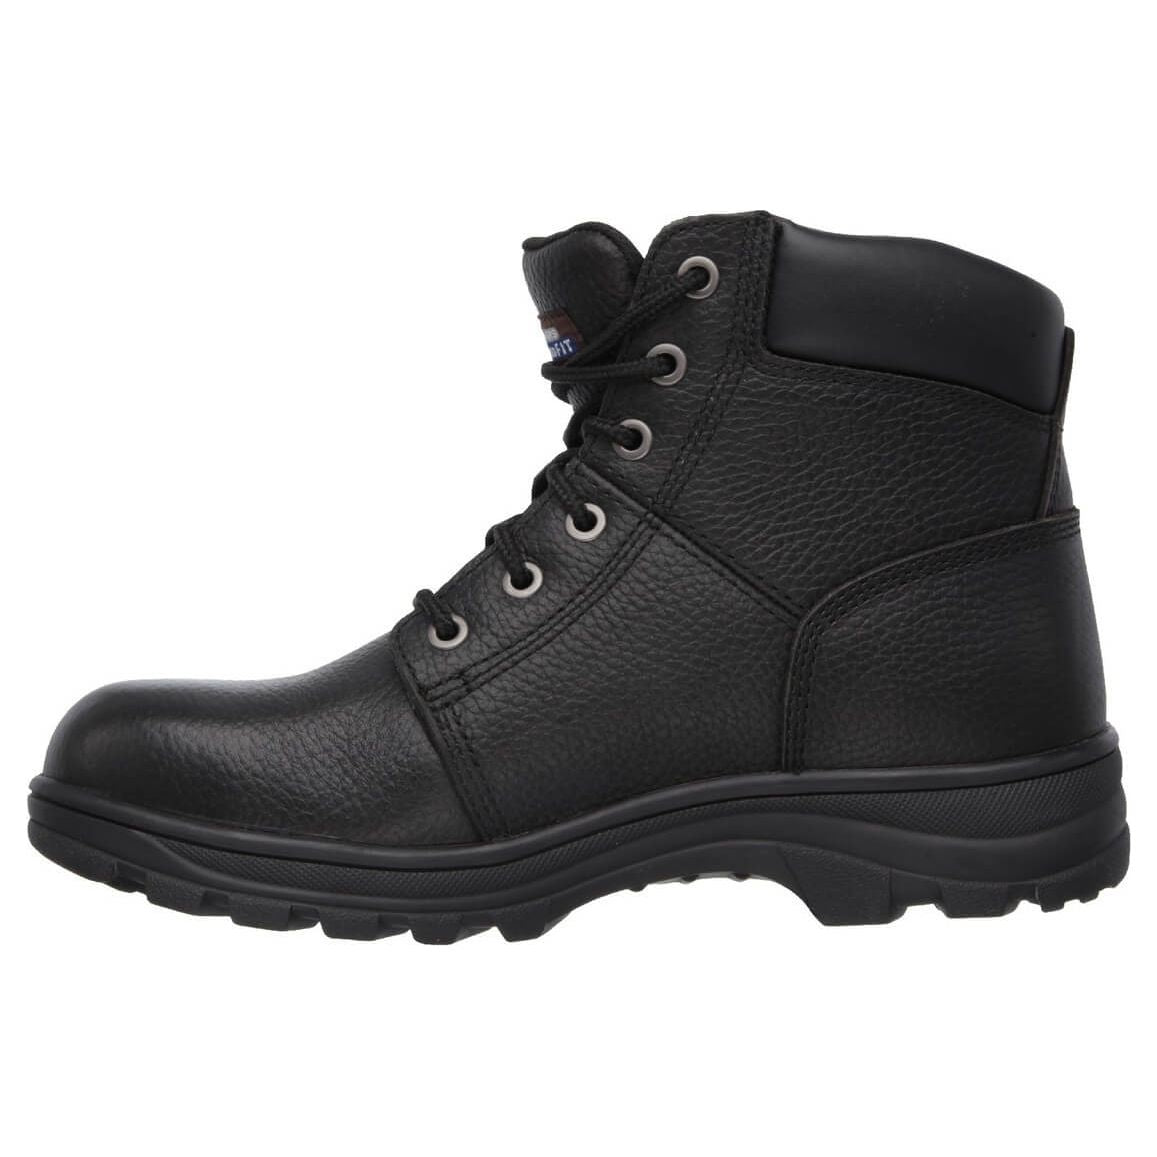 Skechers Workshire Work Safety Boots-Black-7